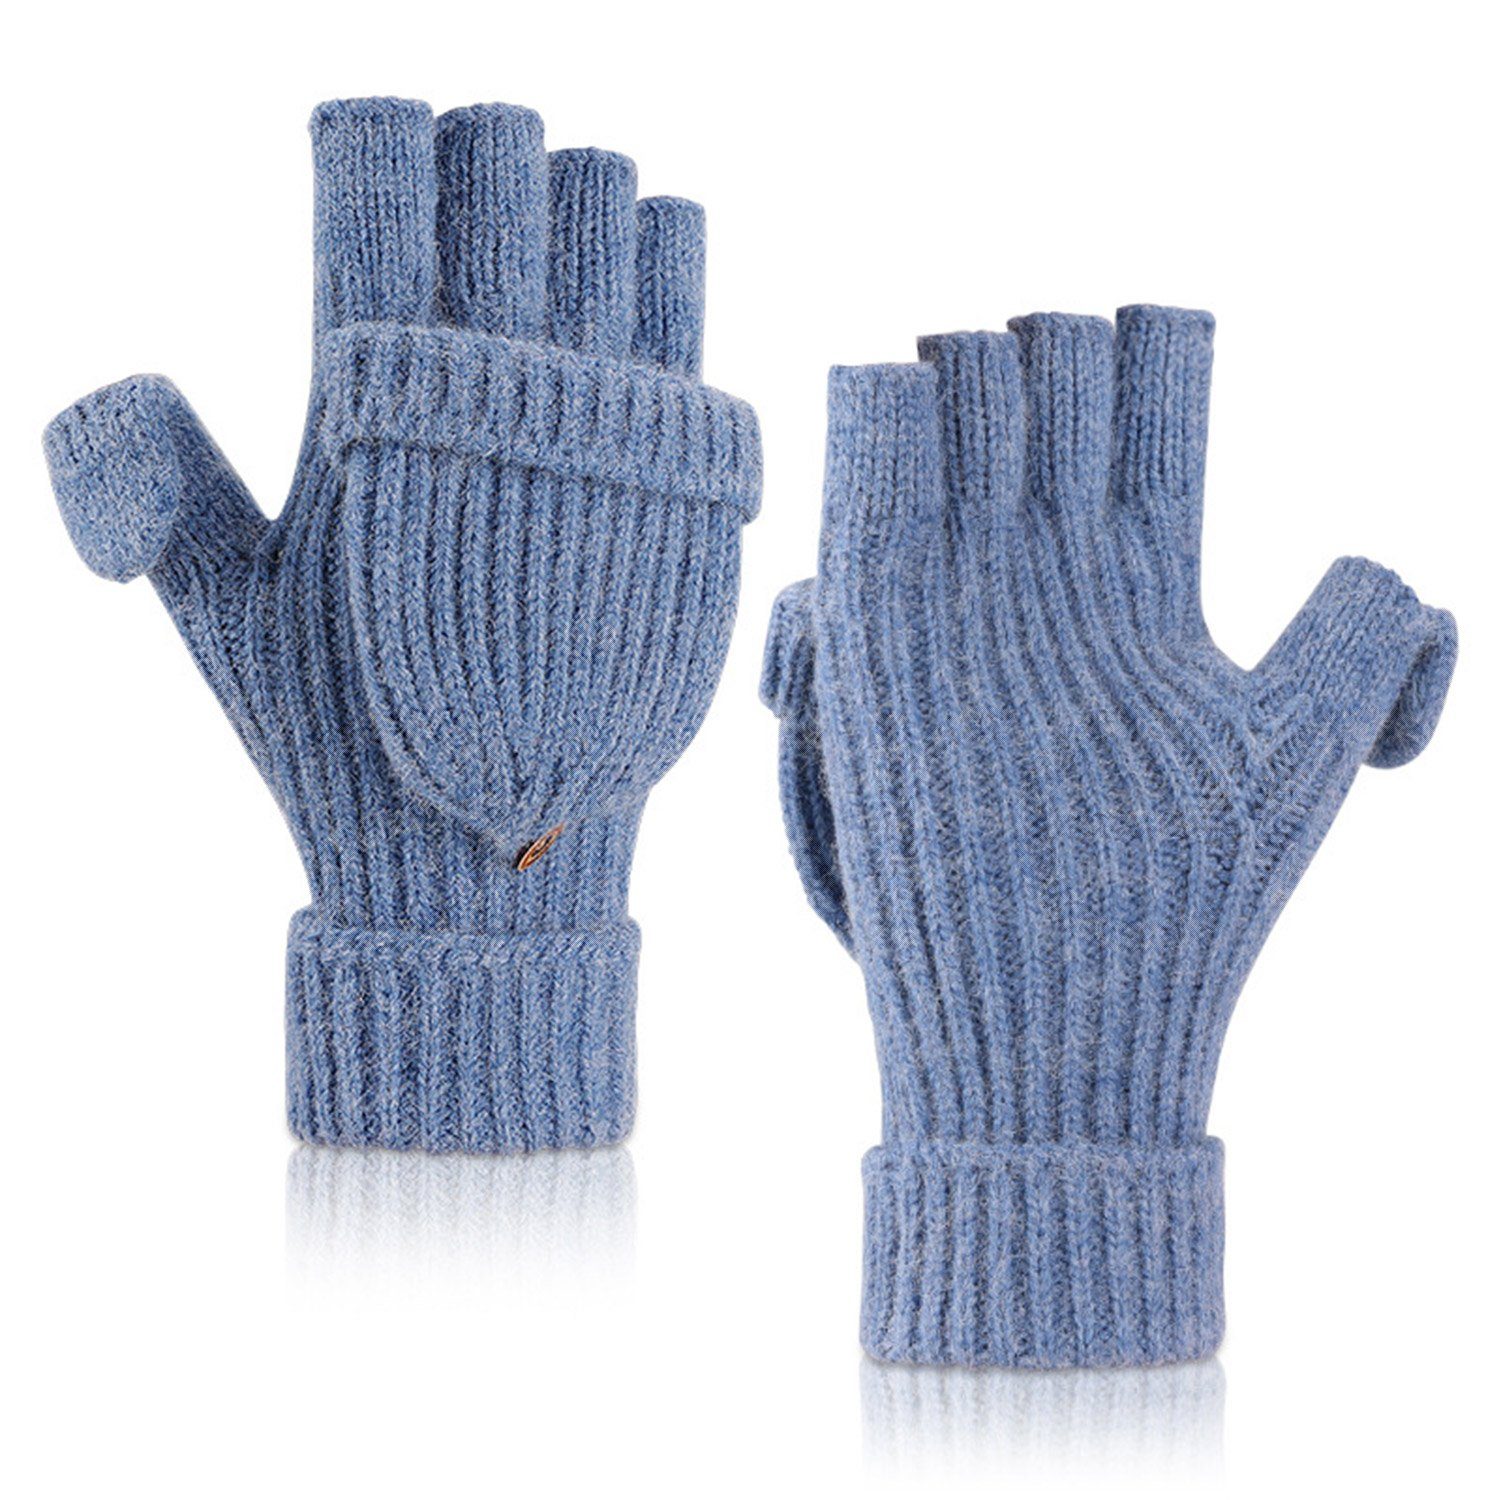 Daisred Baumwollhandschuhe Winterhandschuhe Damen Herren Strick halbe Handschuhe Blau